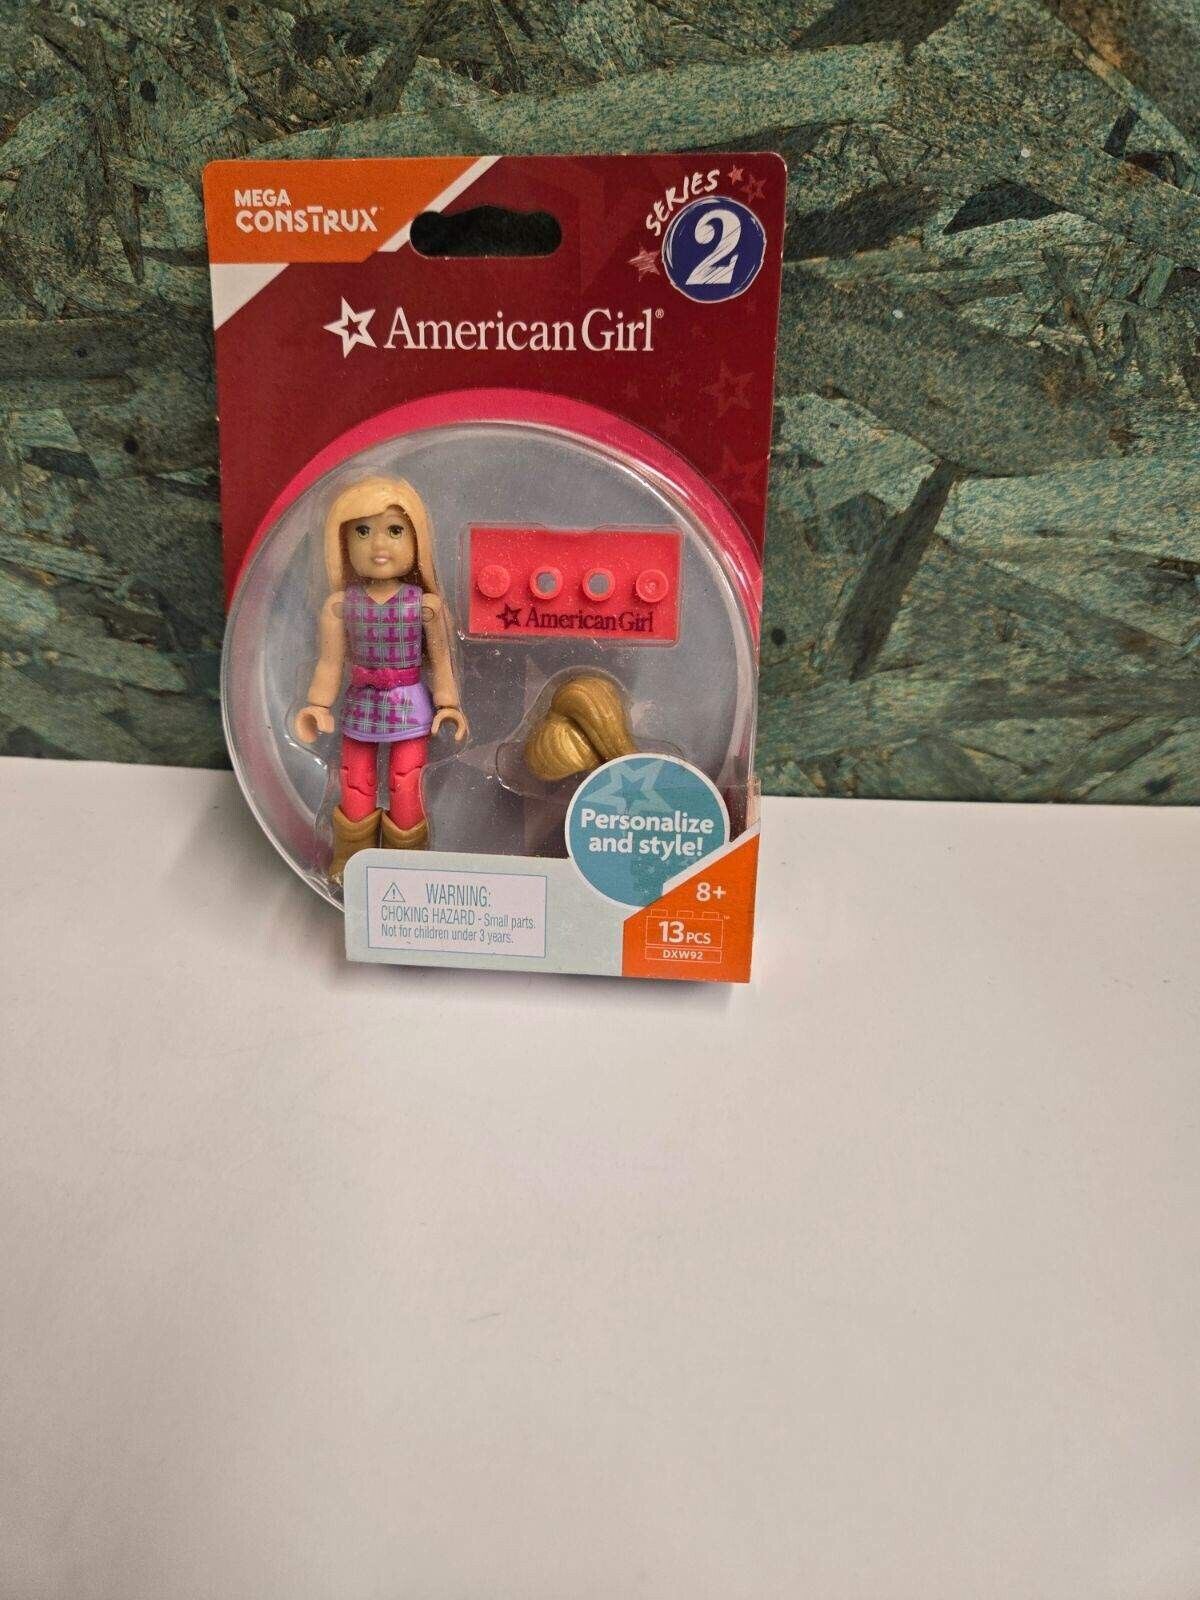 Mega Construx American Girl Mini Figure Toy NEW & SEALED Series 2 MEGA